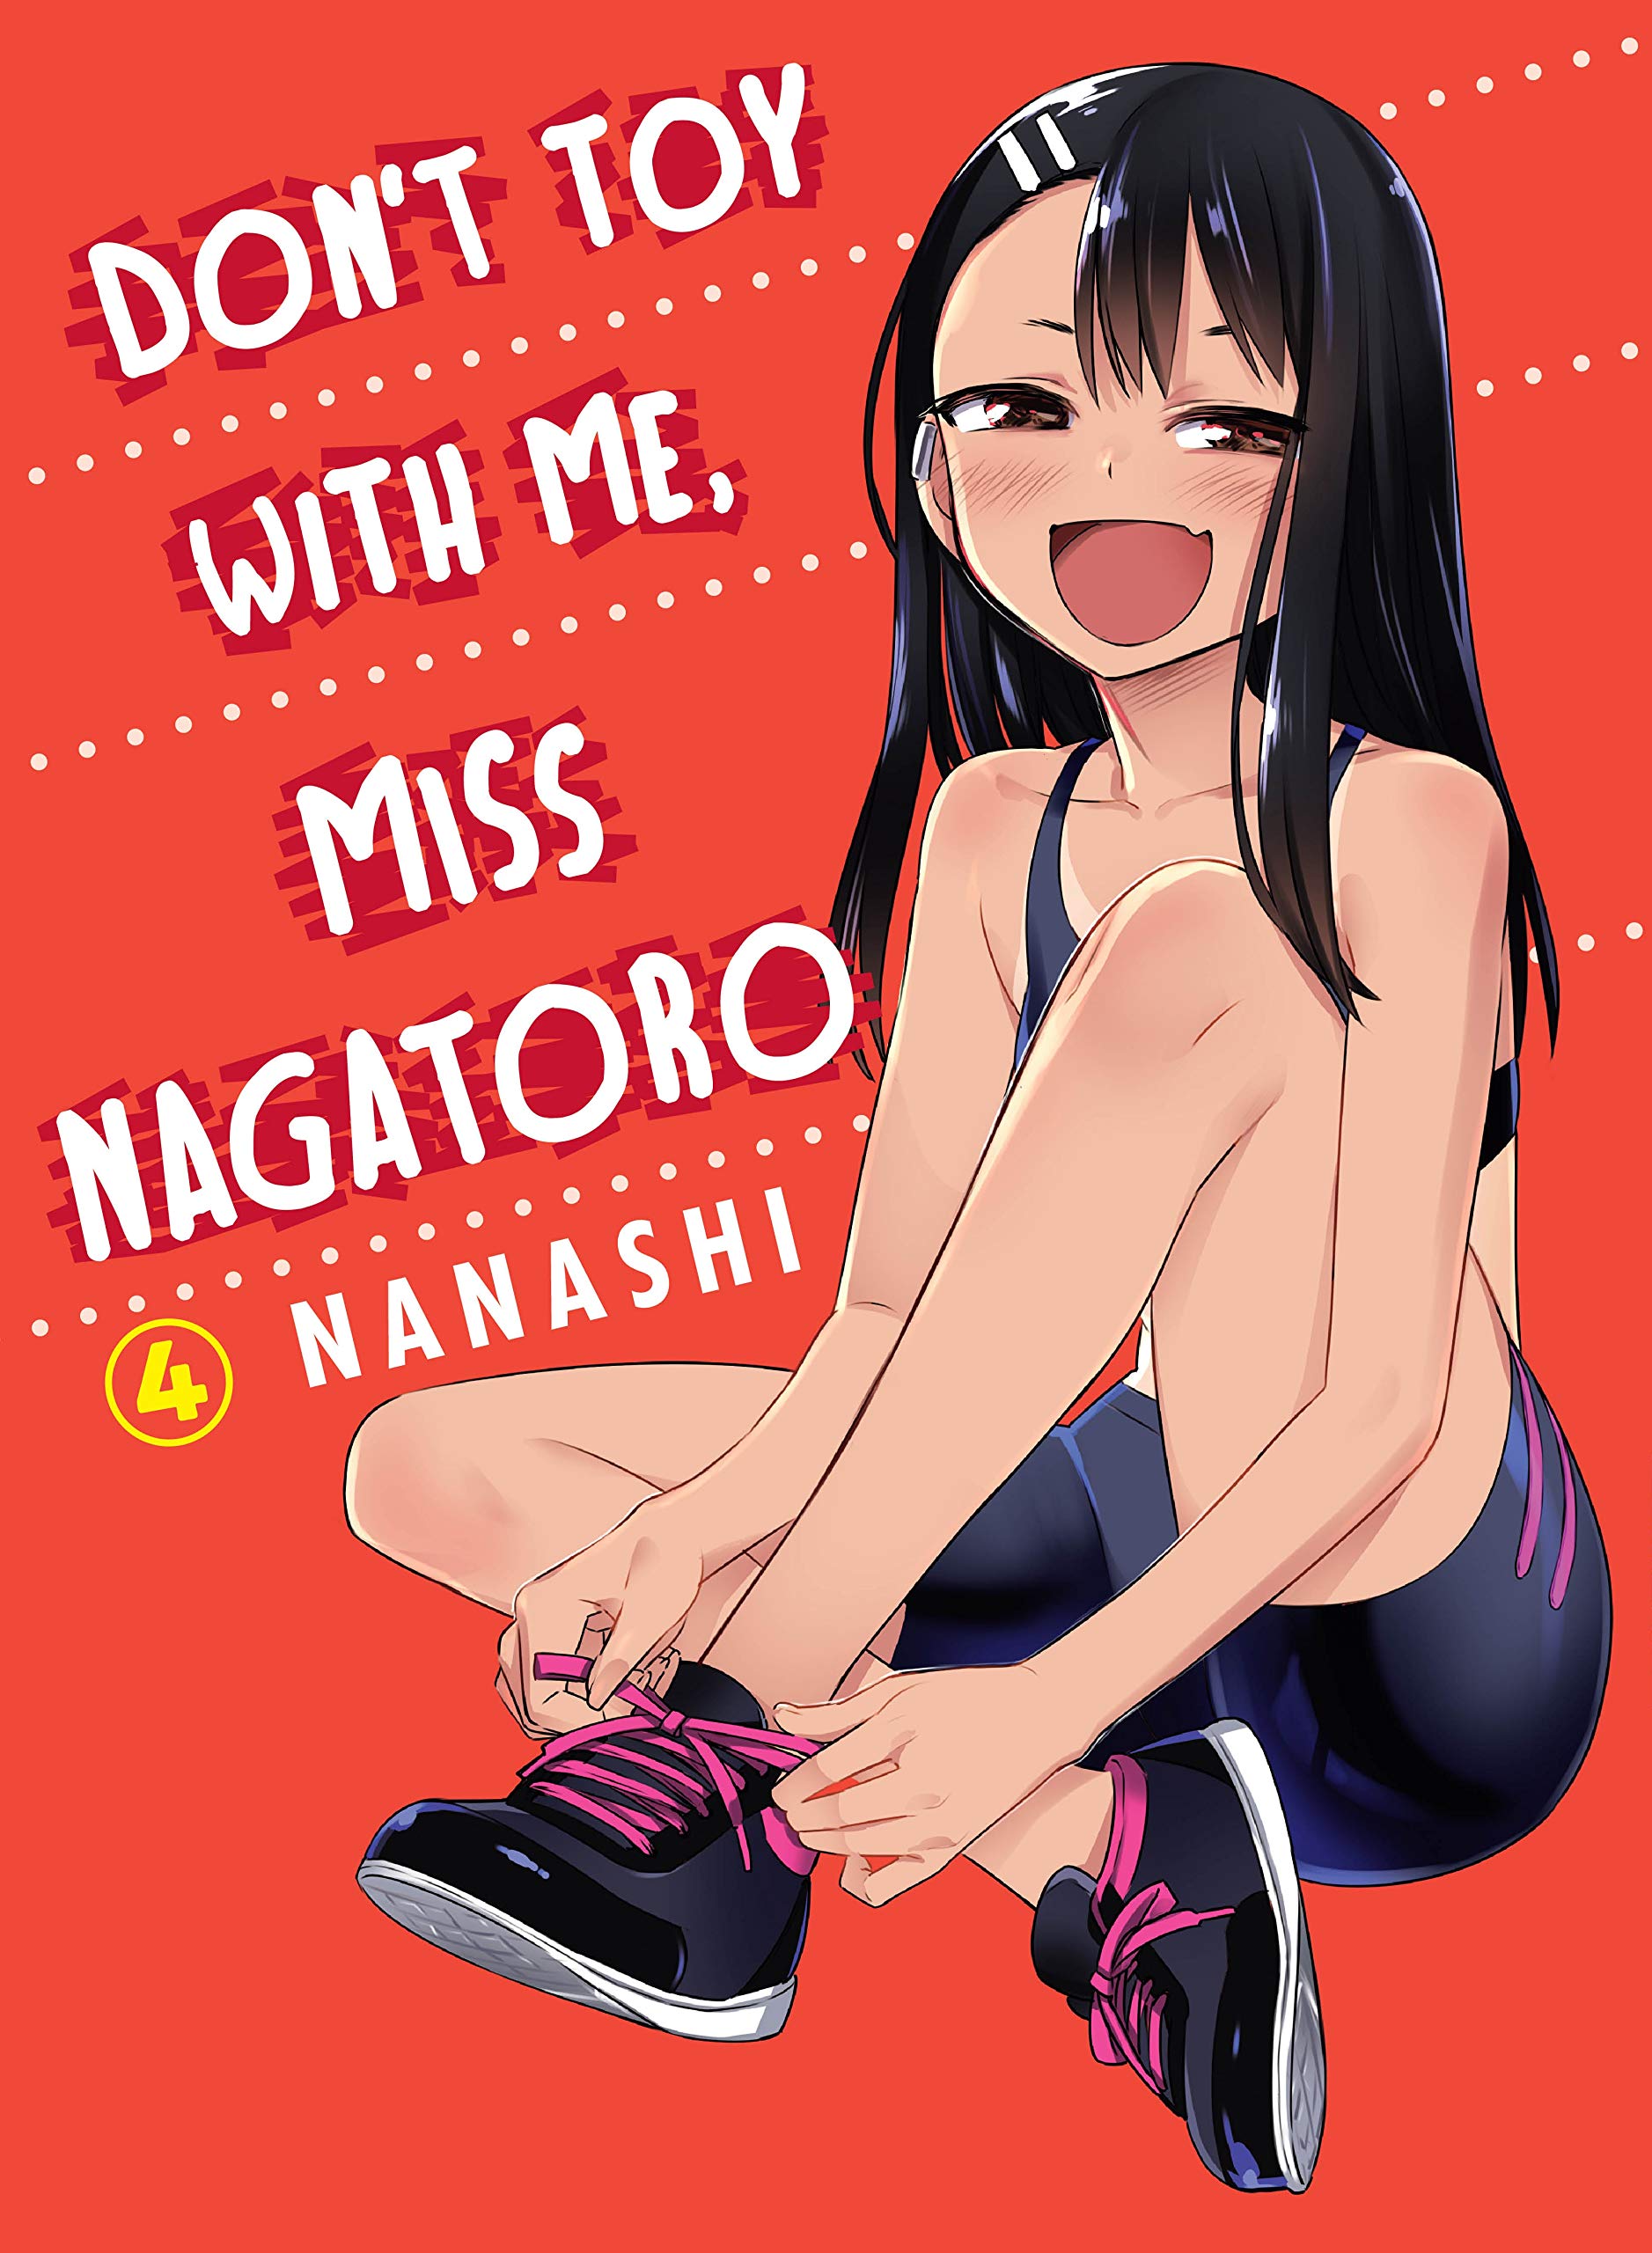 MANGA REVIEW "Don’t Toy With Me, Miss Nagatoro" - Vol. 4 - B